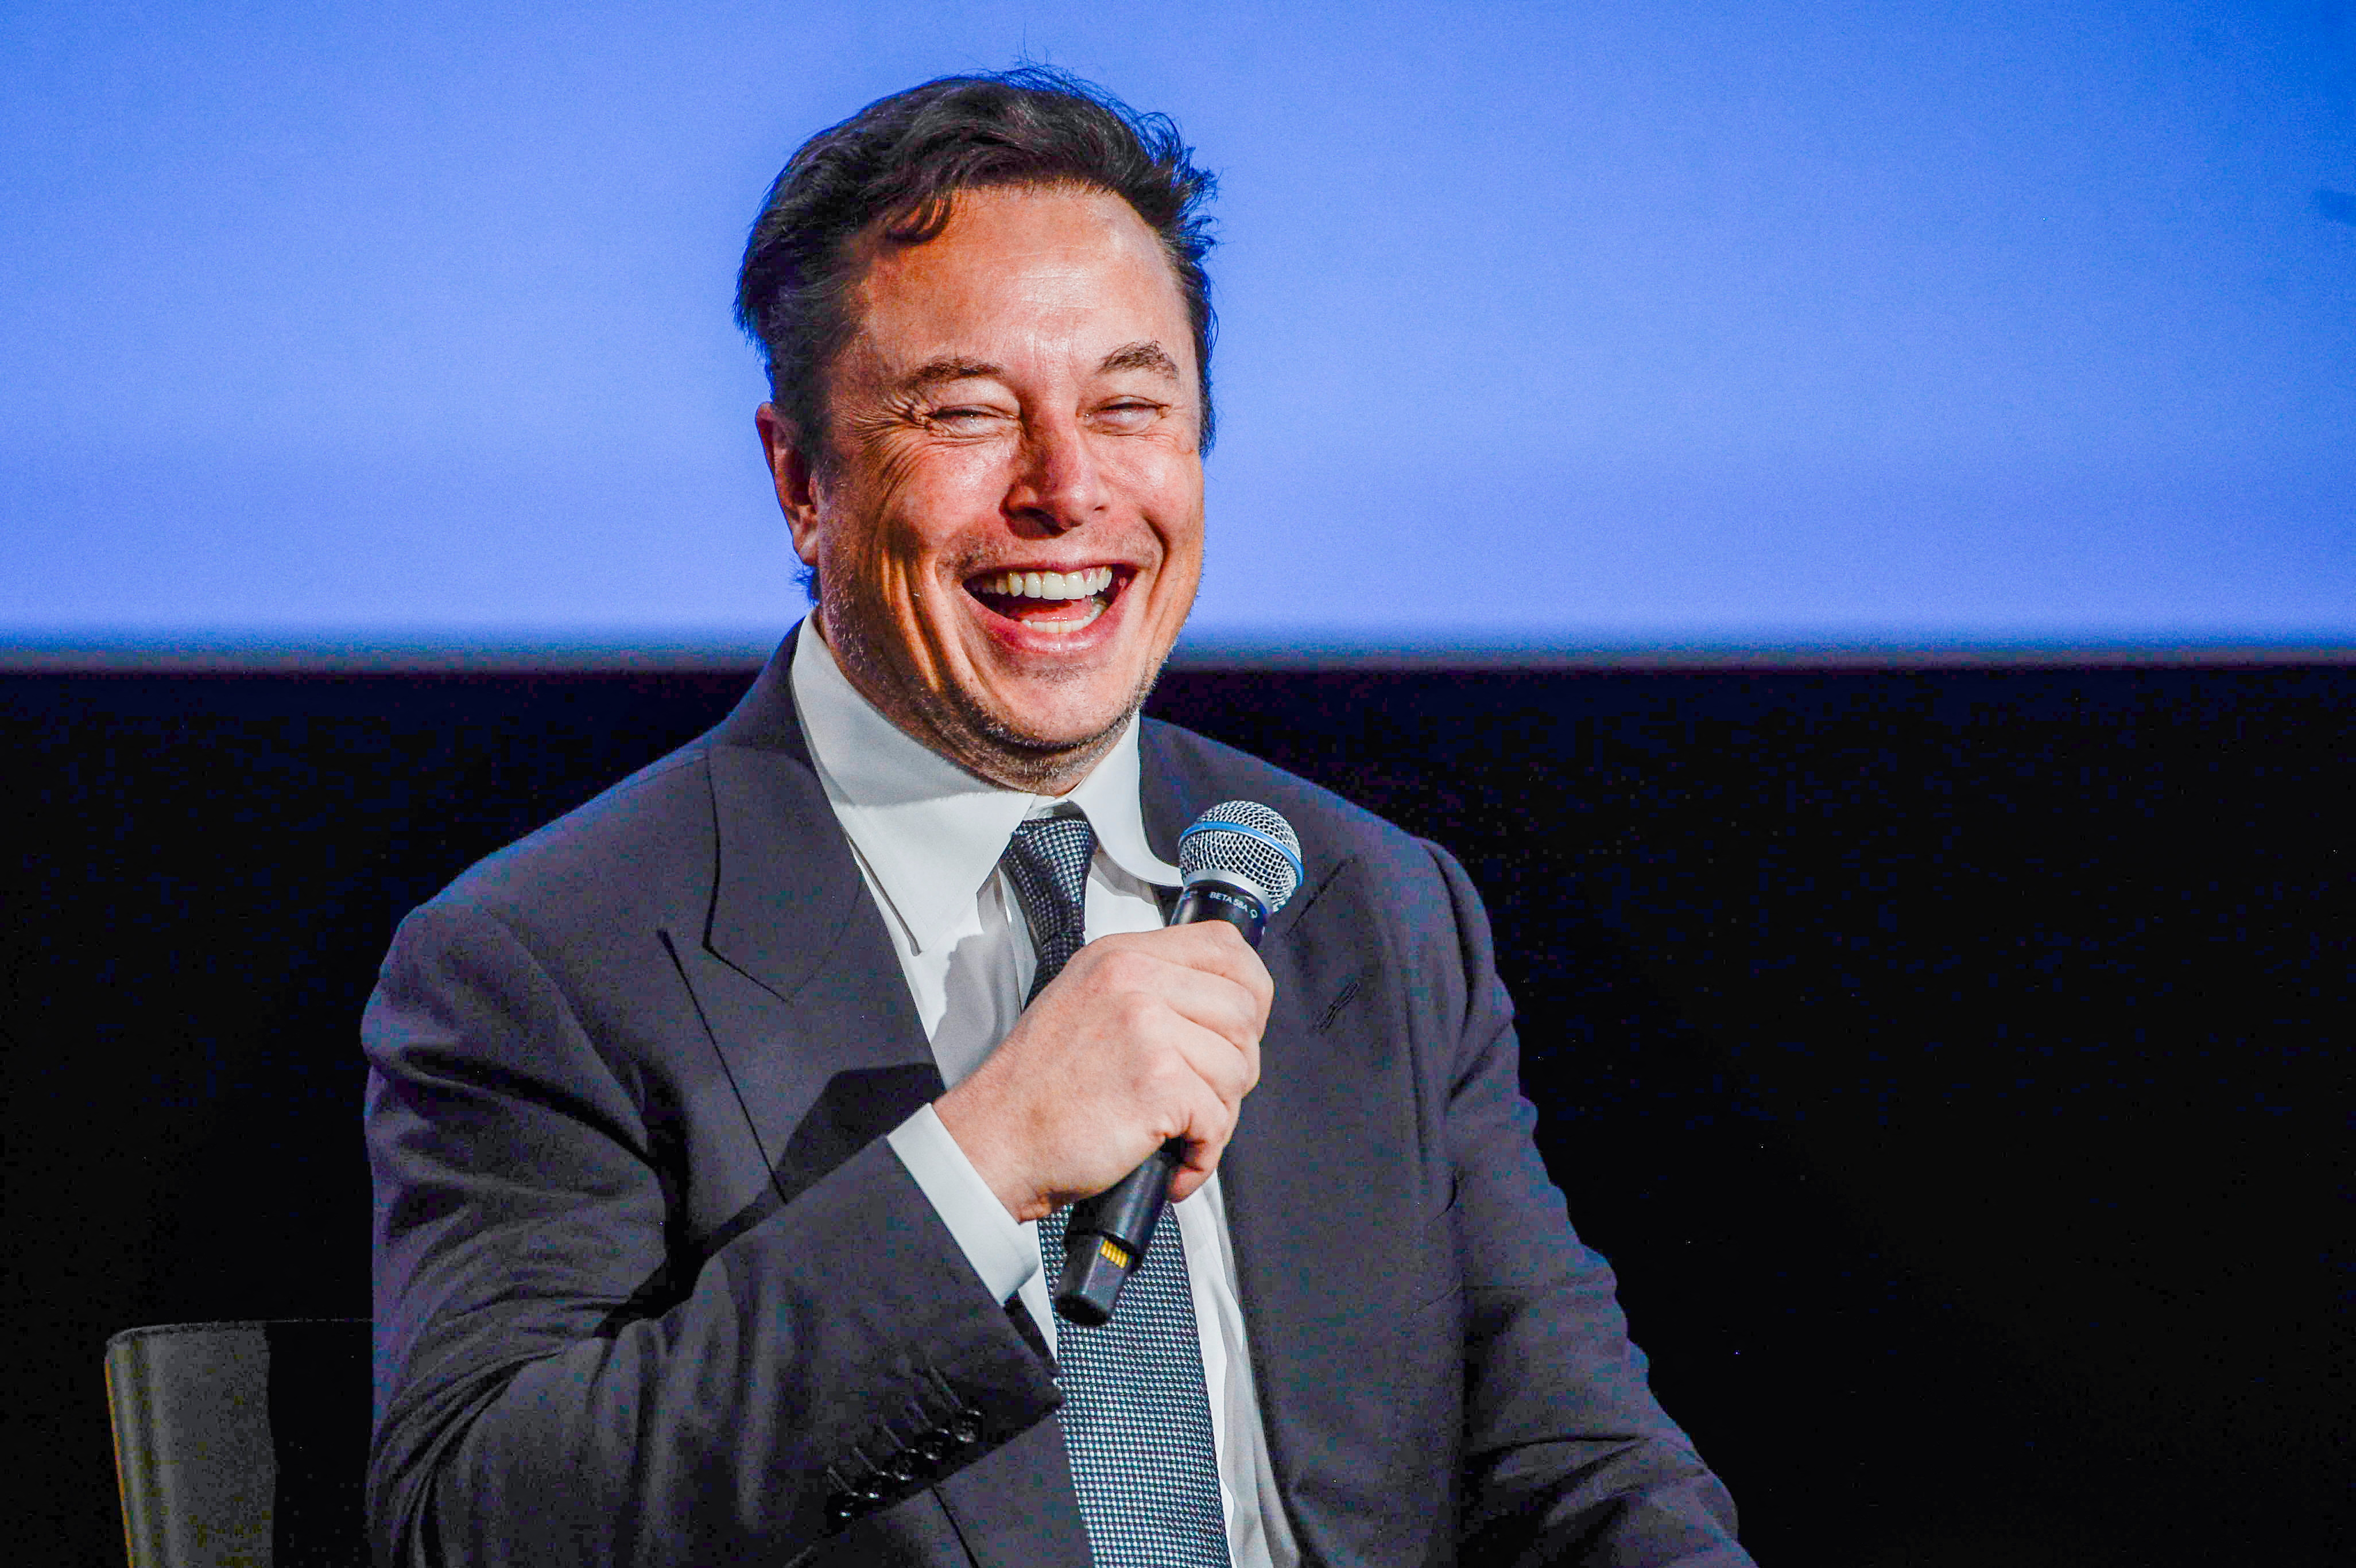 Elon Musk sold Tesla Stock after purchasing Twitter